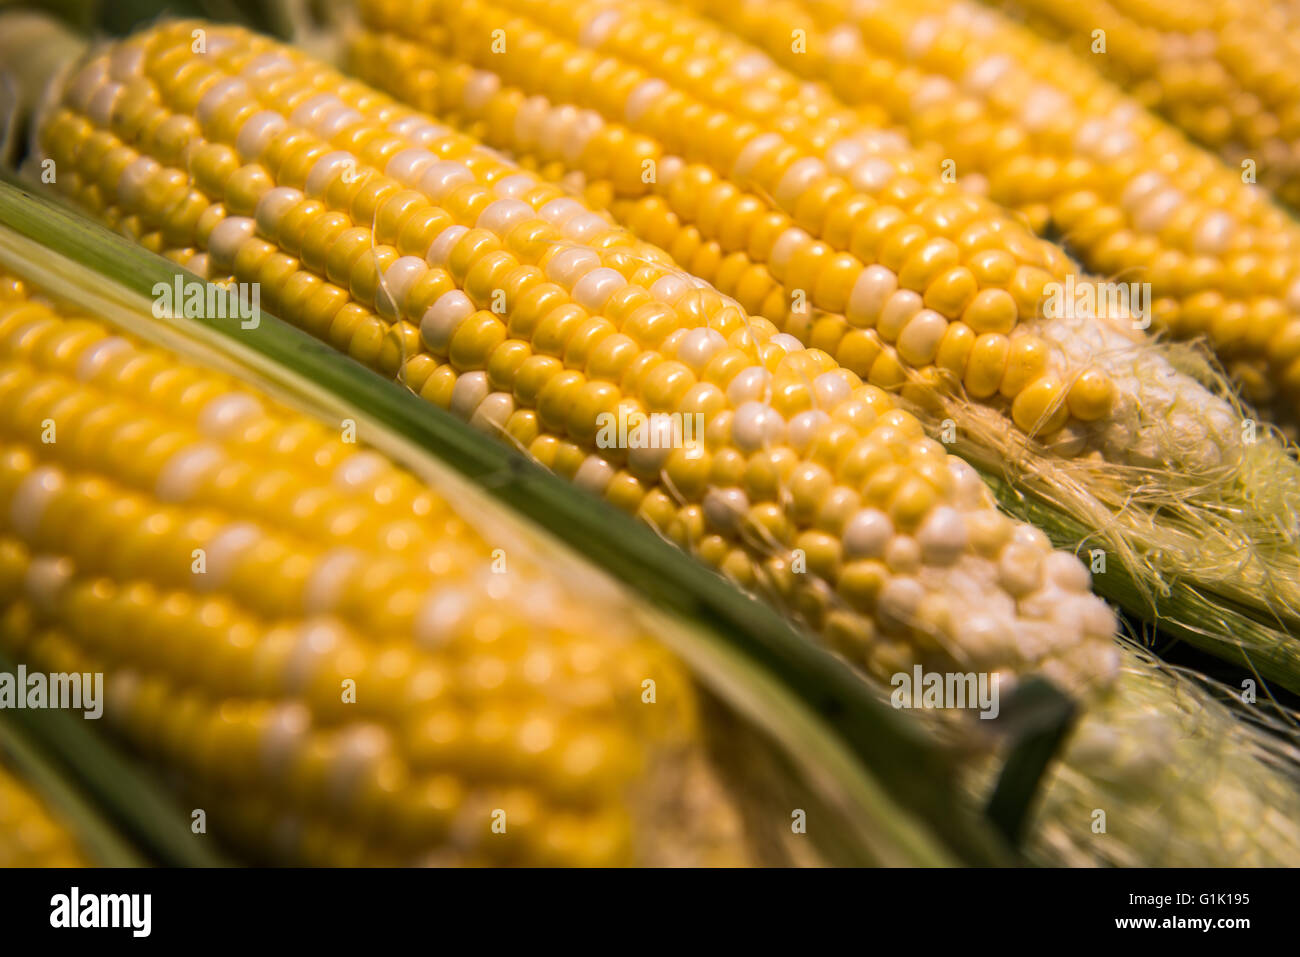 Close up of fresh yellow corn on the cob Stock Photo